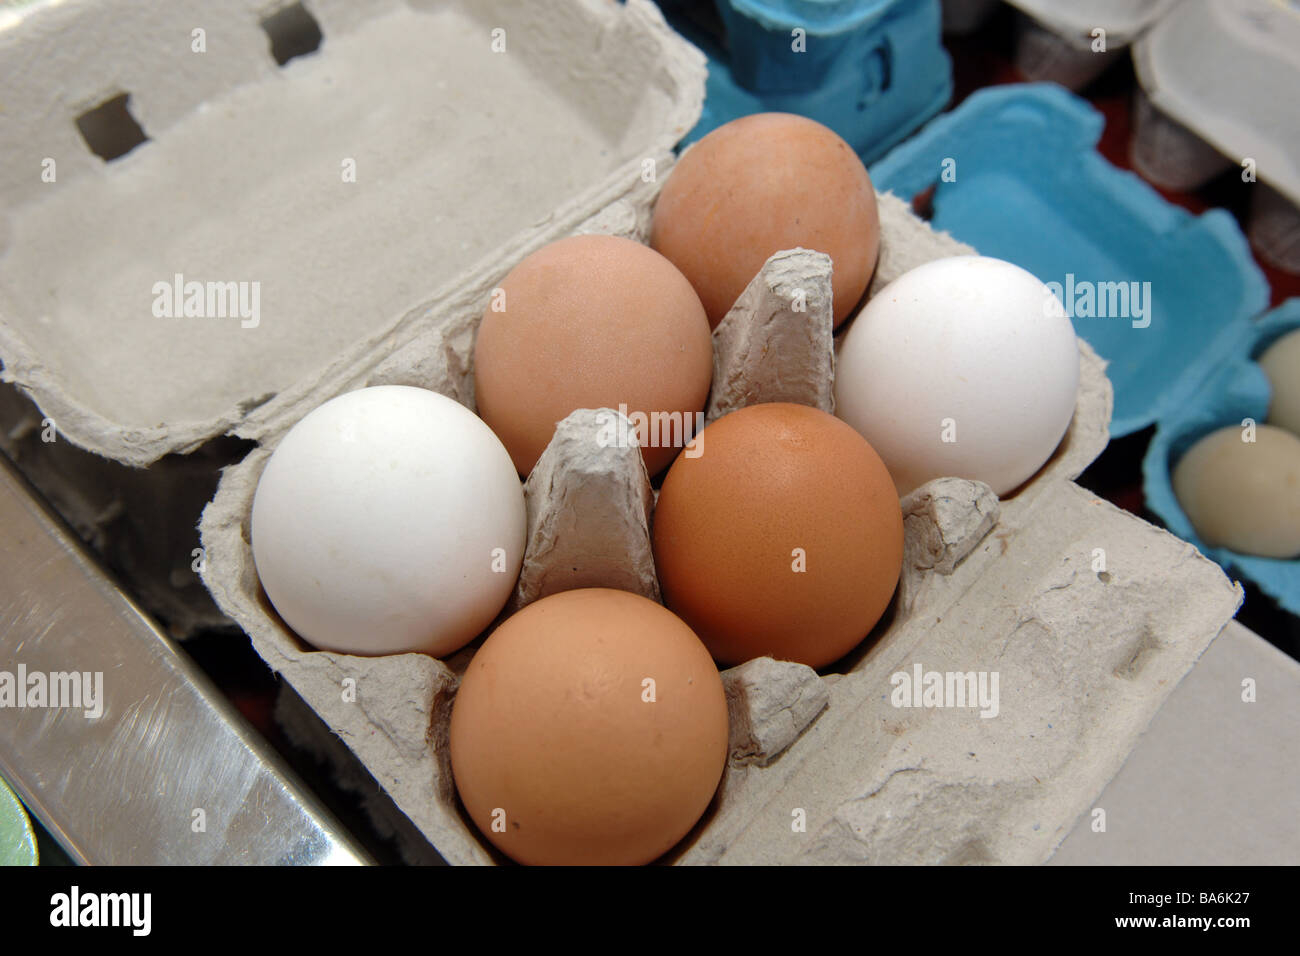 A carton of free range eggs on display Stock Photo